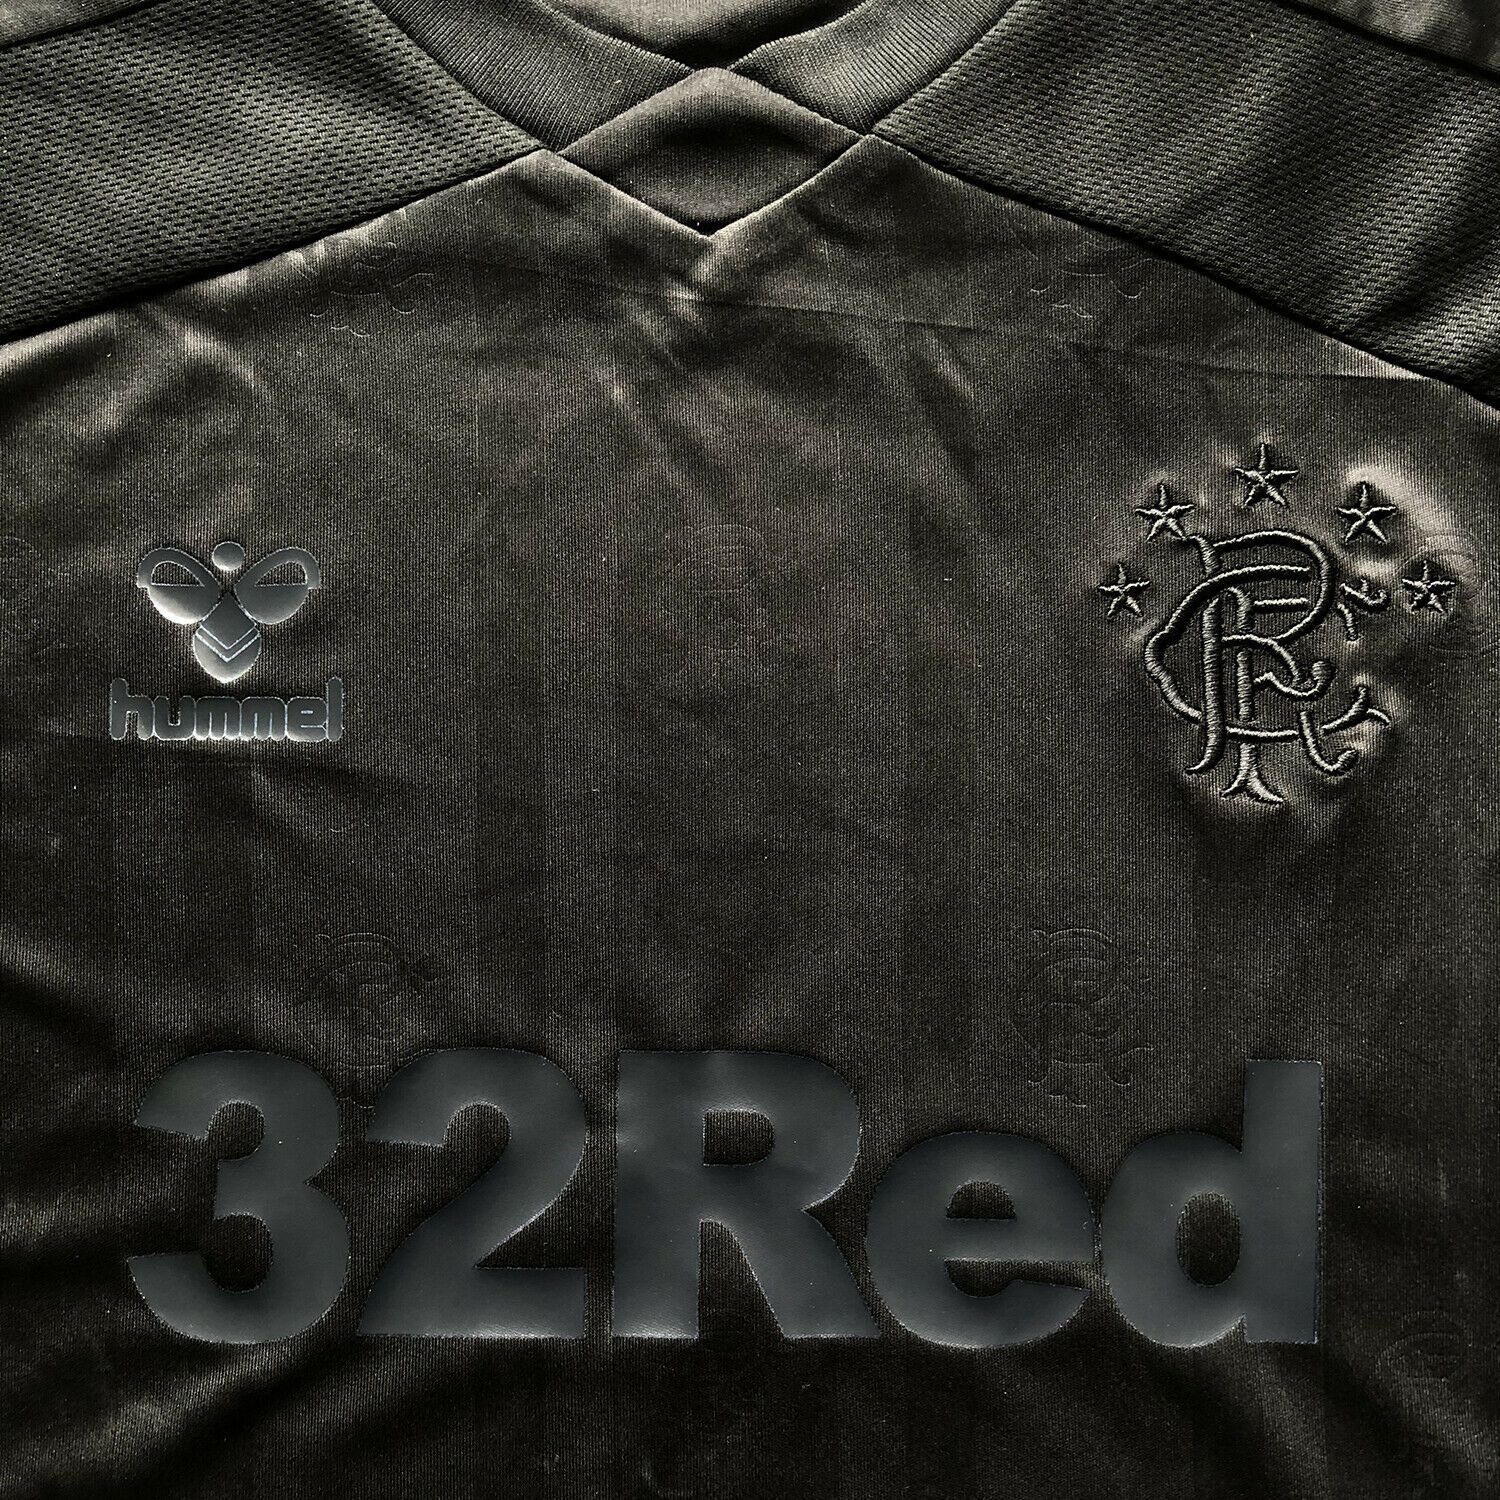 rangers black edition fan shirt